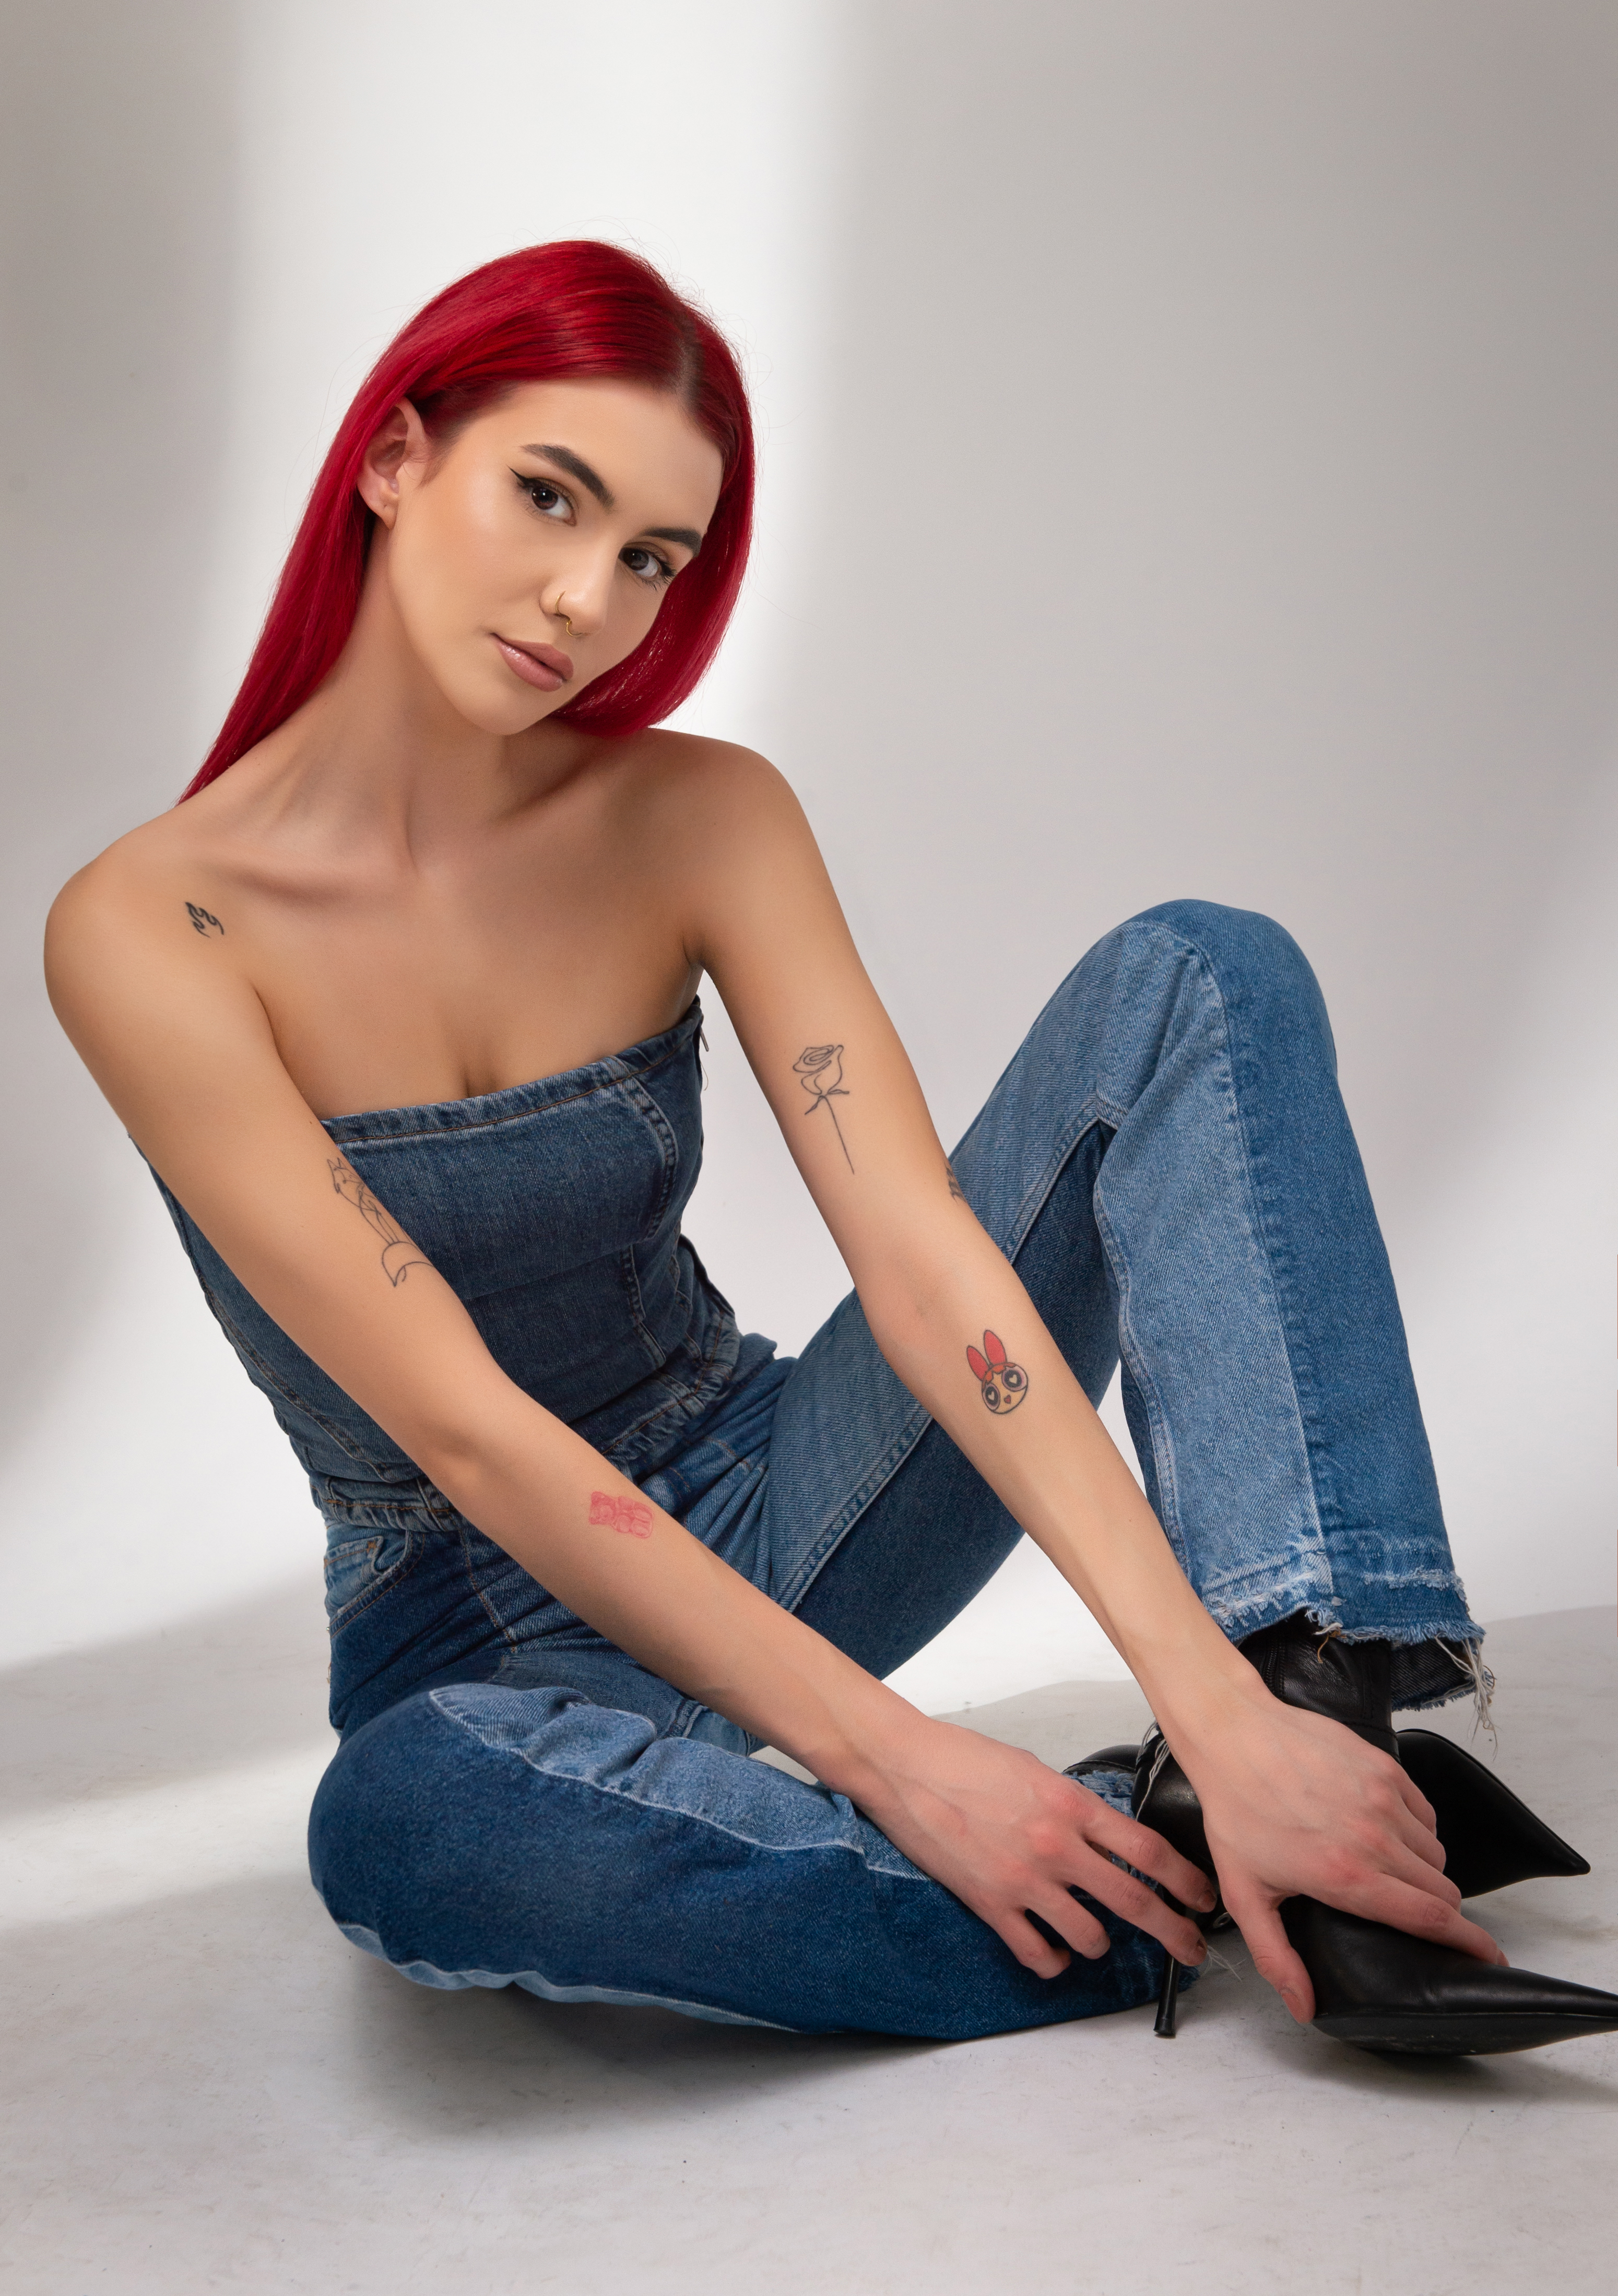 Cristian Iancu Women Redhead Piercing Tattoo Blossom Powerpuff Girls Denim Bare Shoulders Dyed Hair  3099x4398